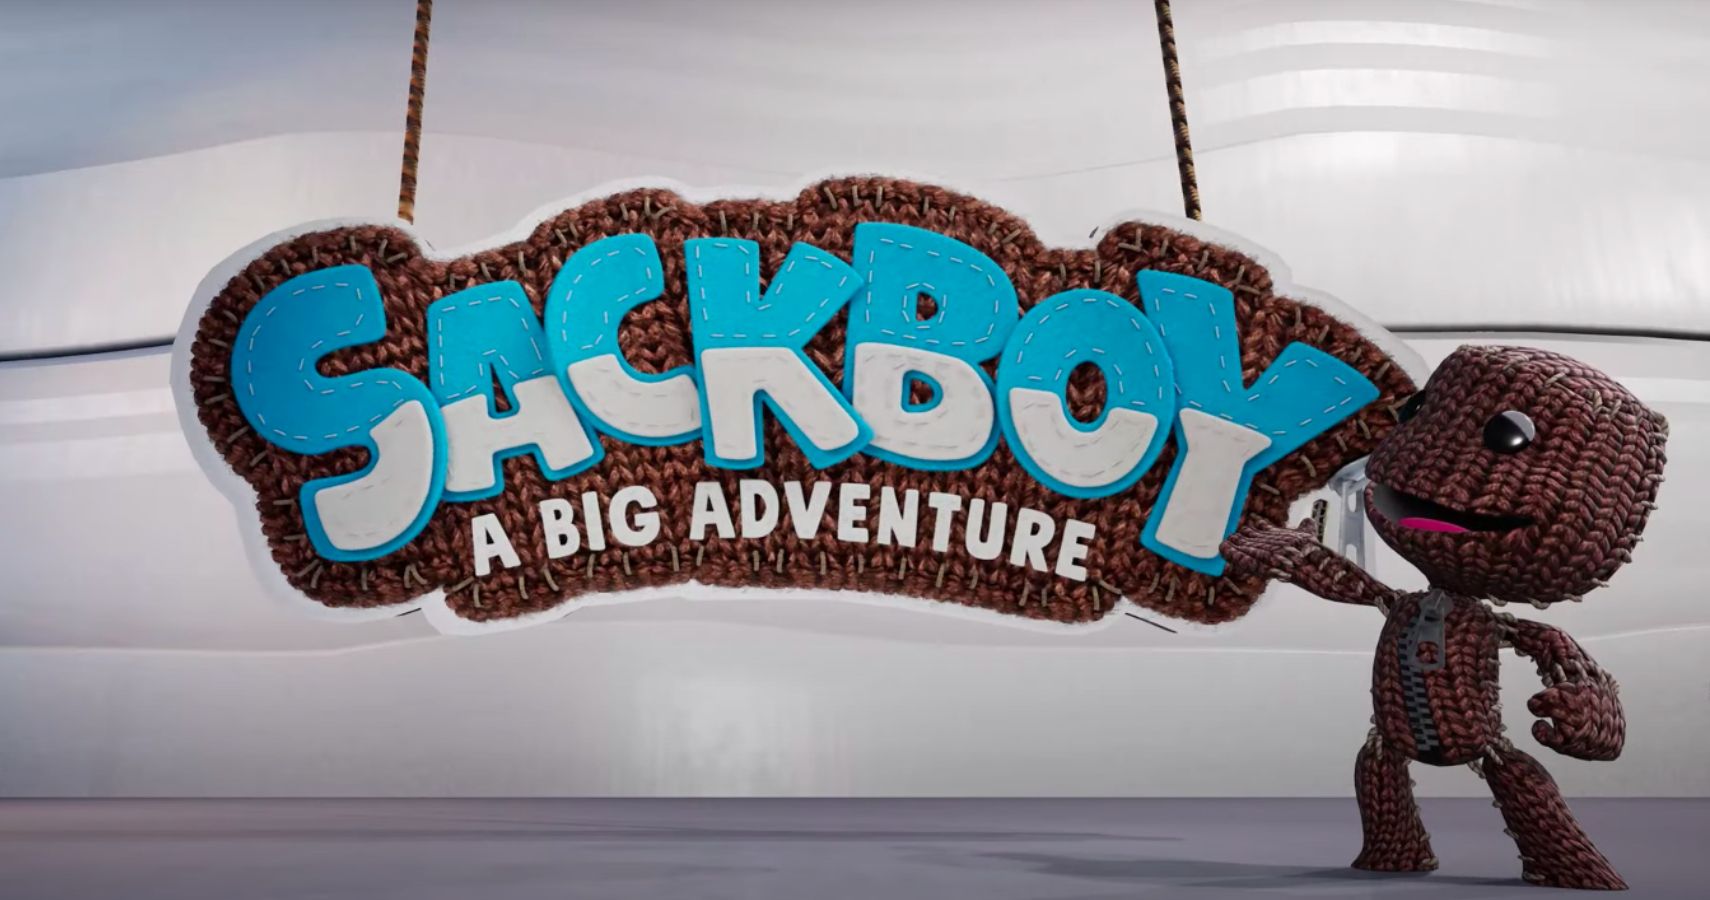 download little big planet sackboy adventure